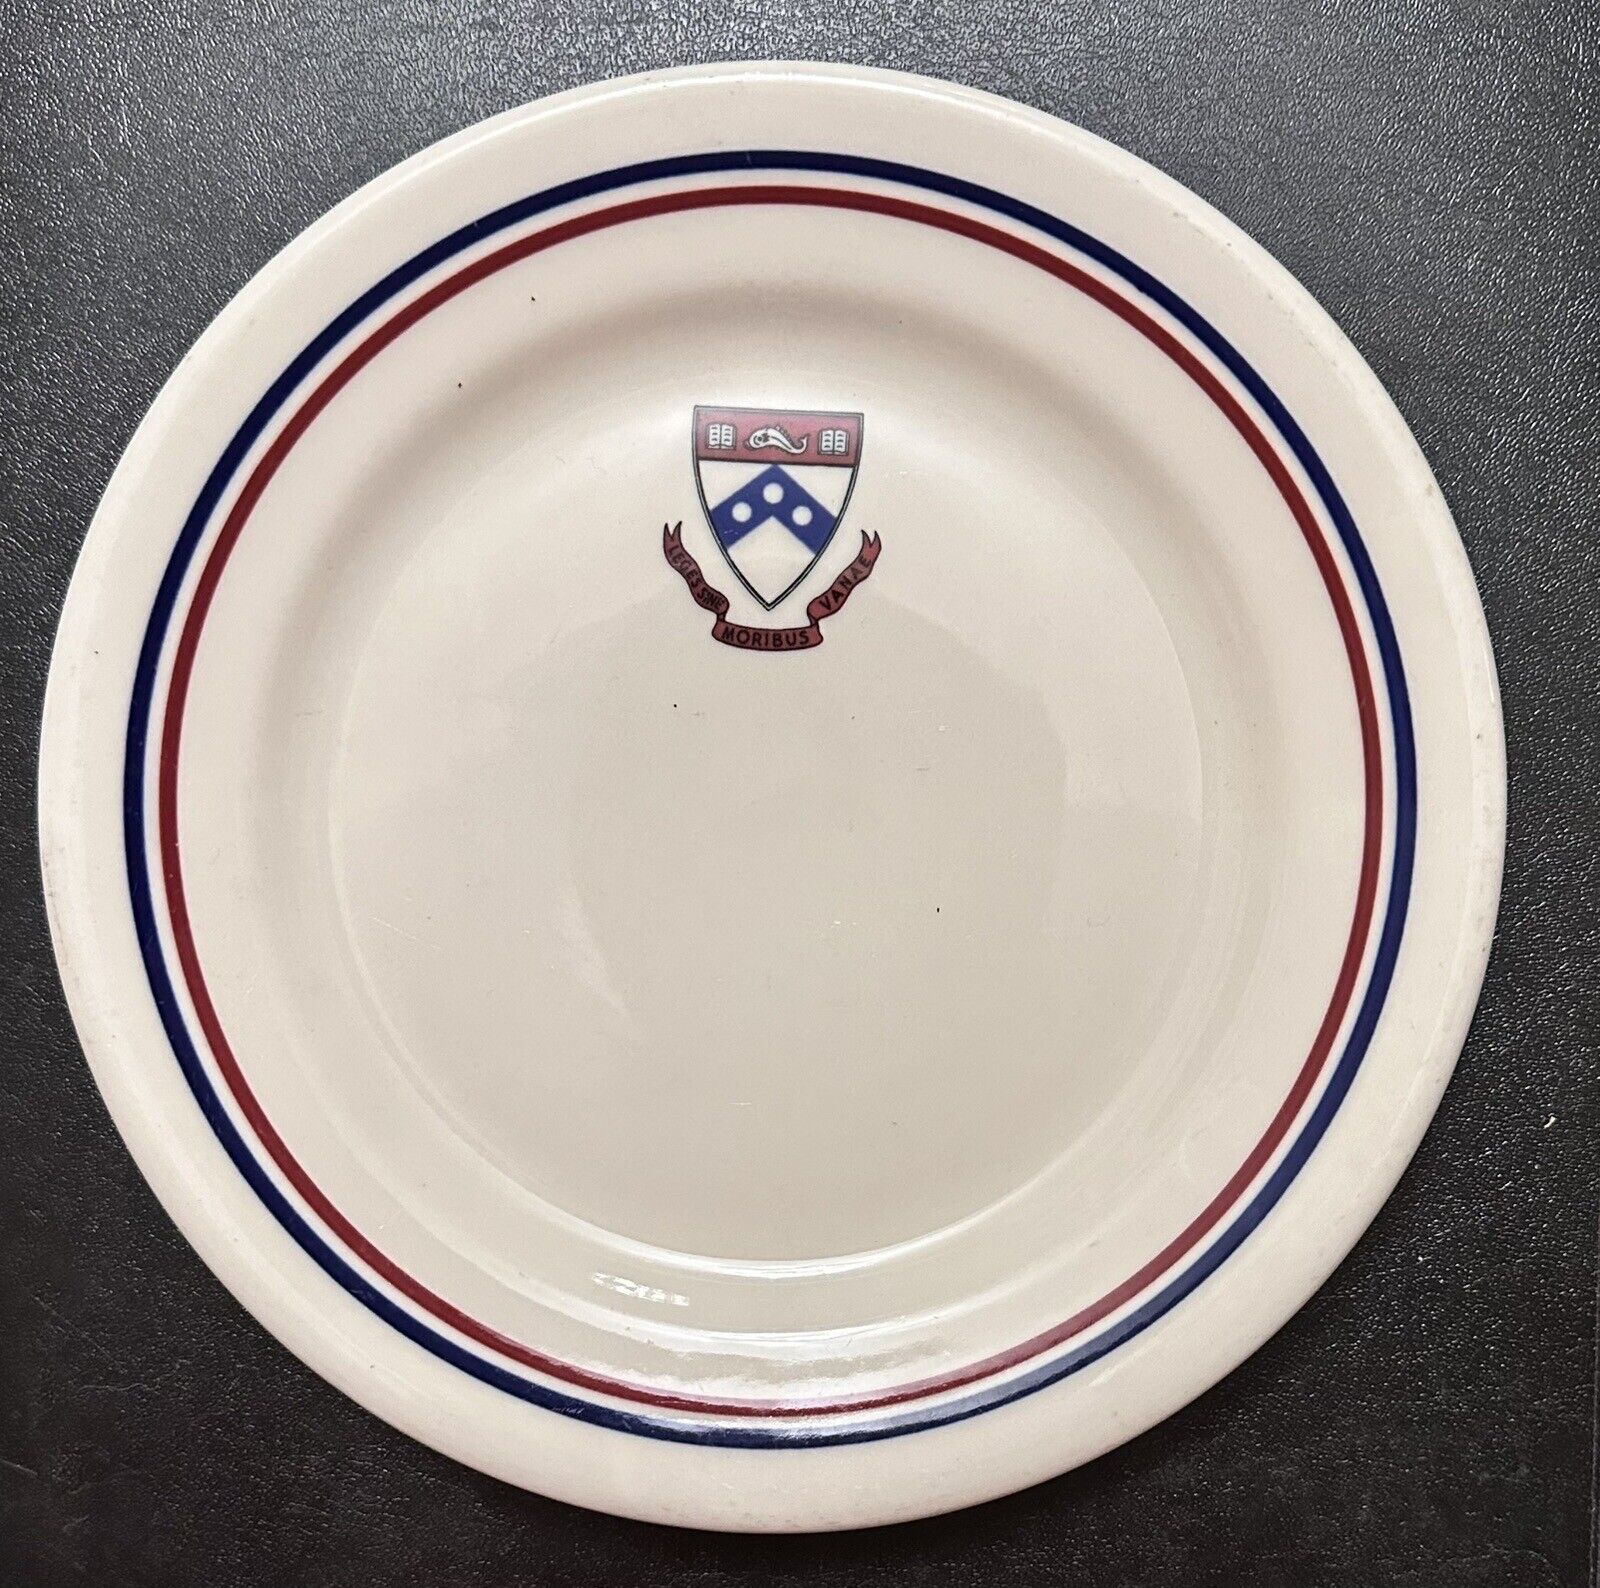 Vintage University of Pennsylvania 8.25” Salad Plates by Shenango China